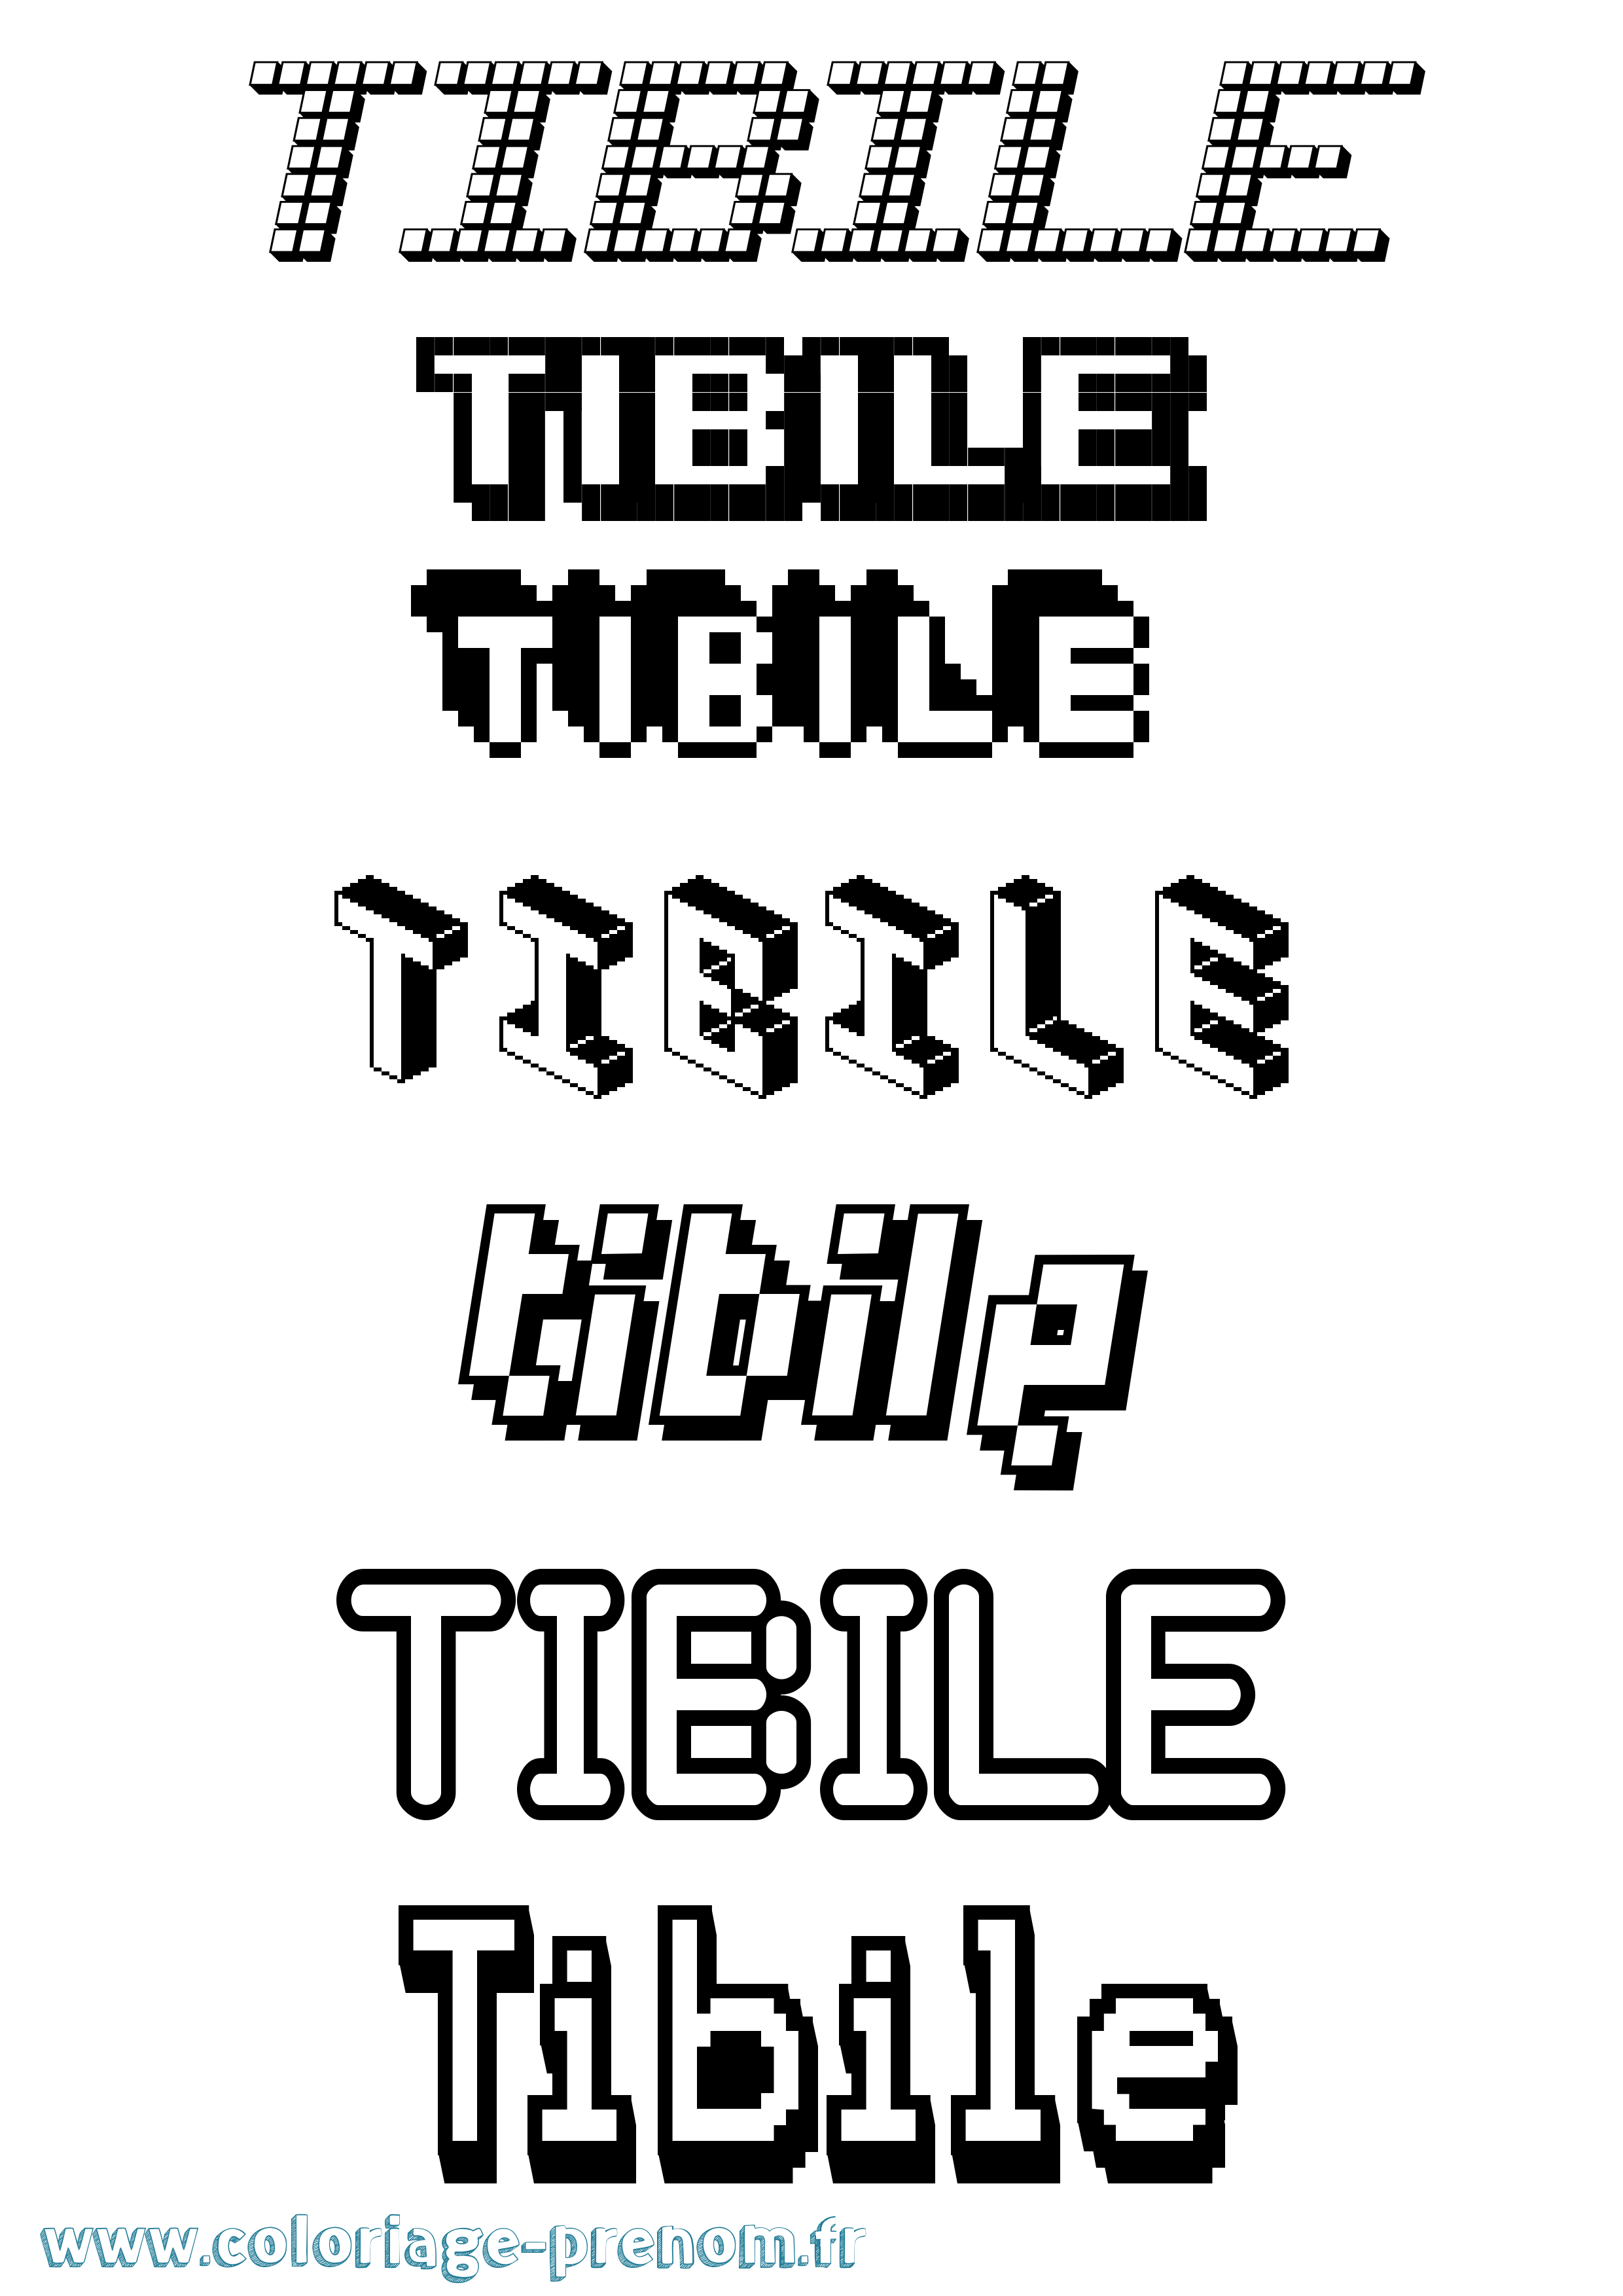 Coloriage prénom Tibile Pixel